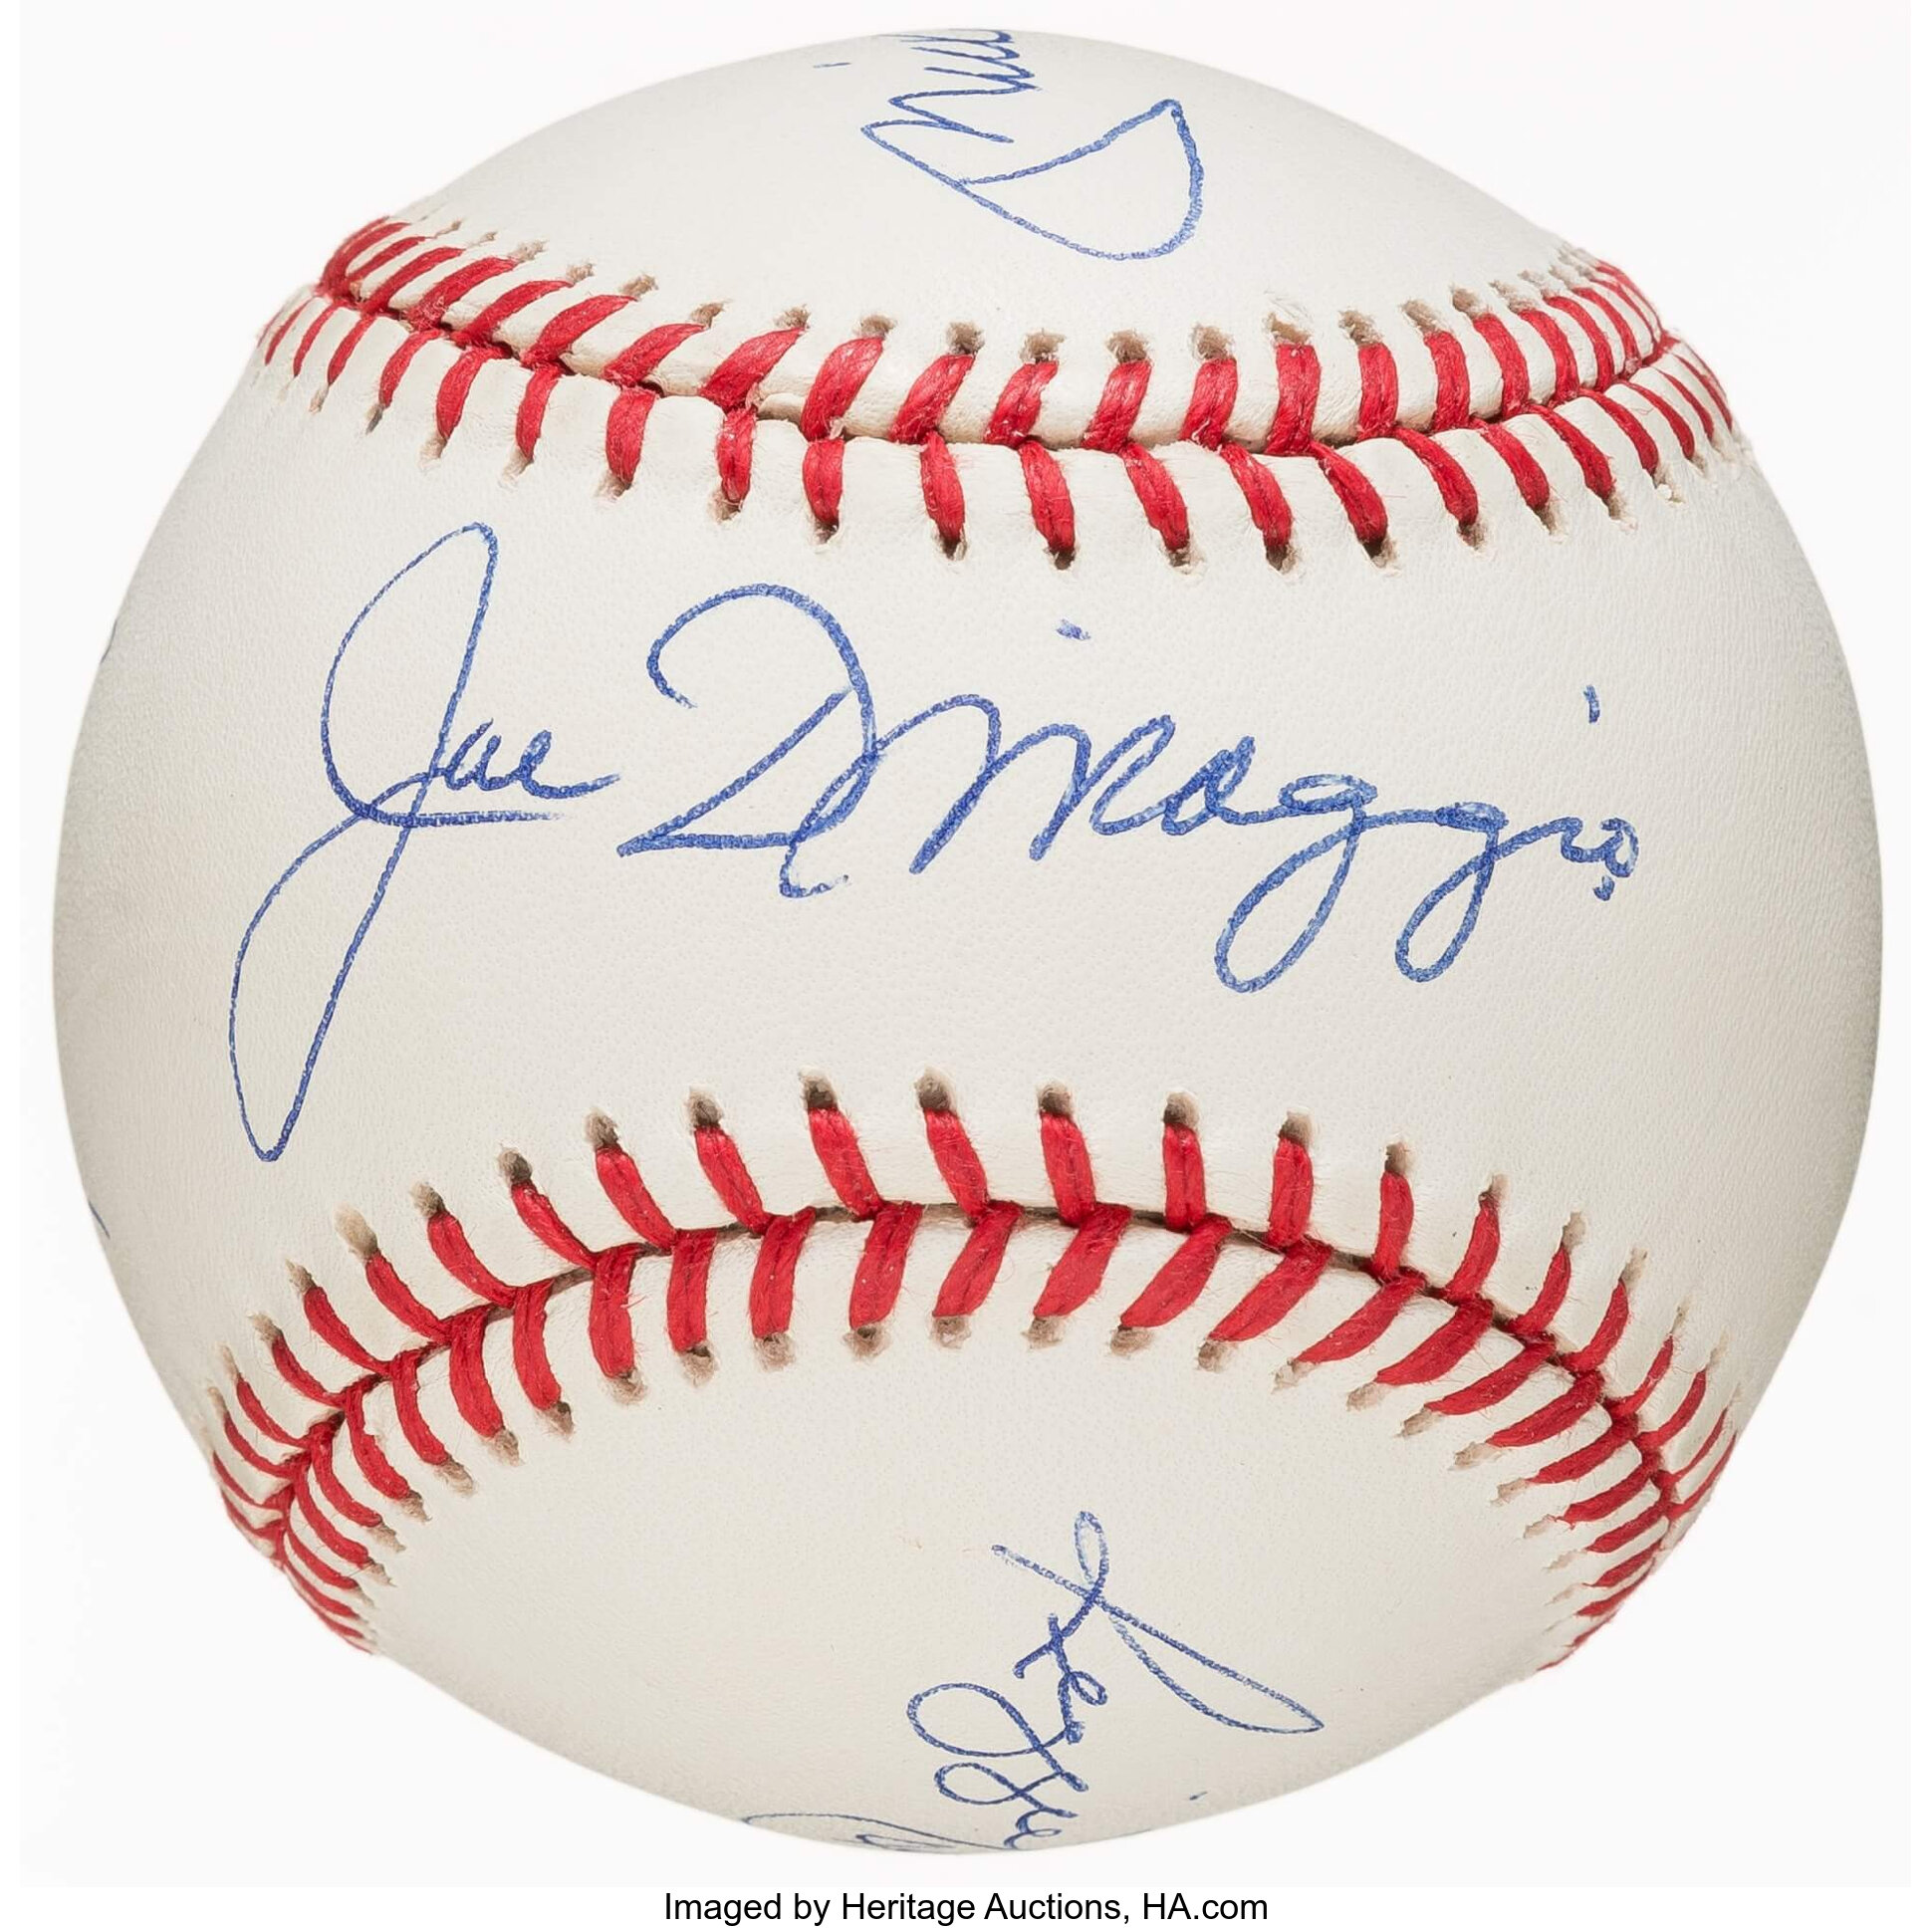 Don Mattingly - Autographed Signed Baseball